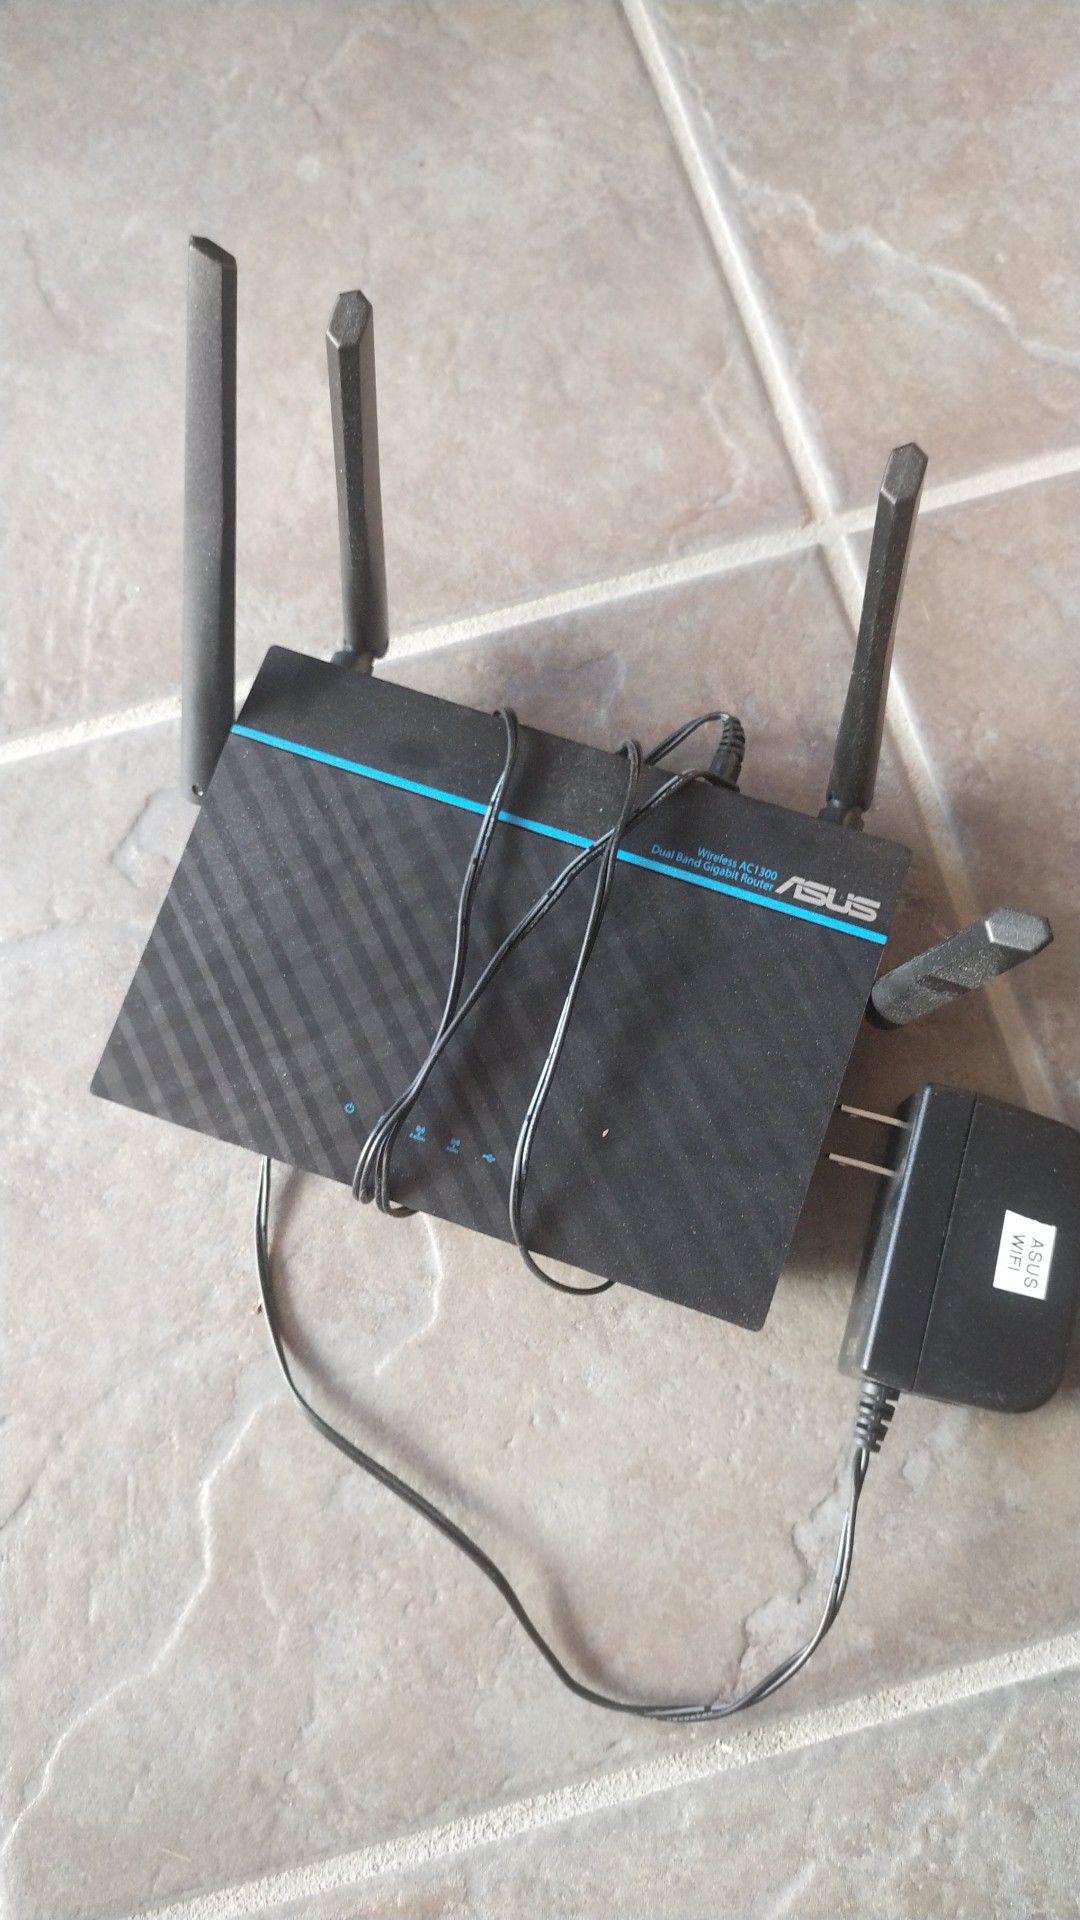 Asus AC1300 Dual band gigabit Wi-Fi router